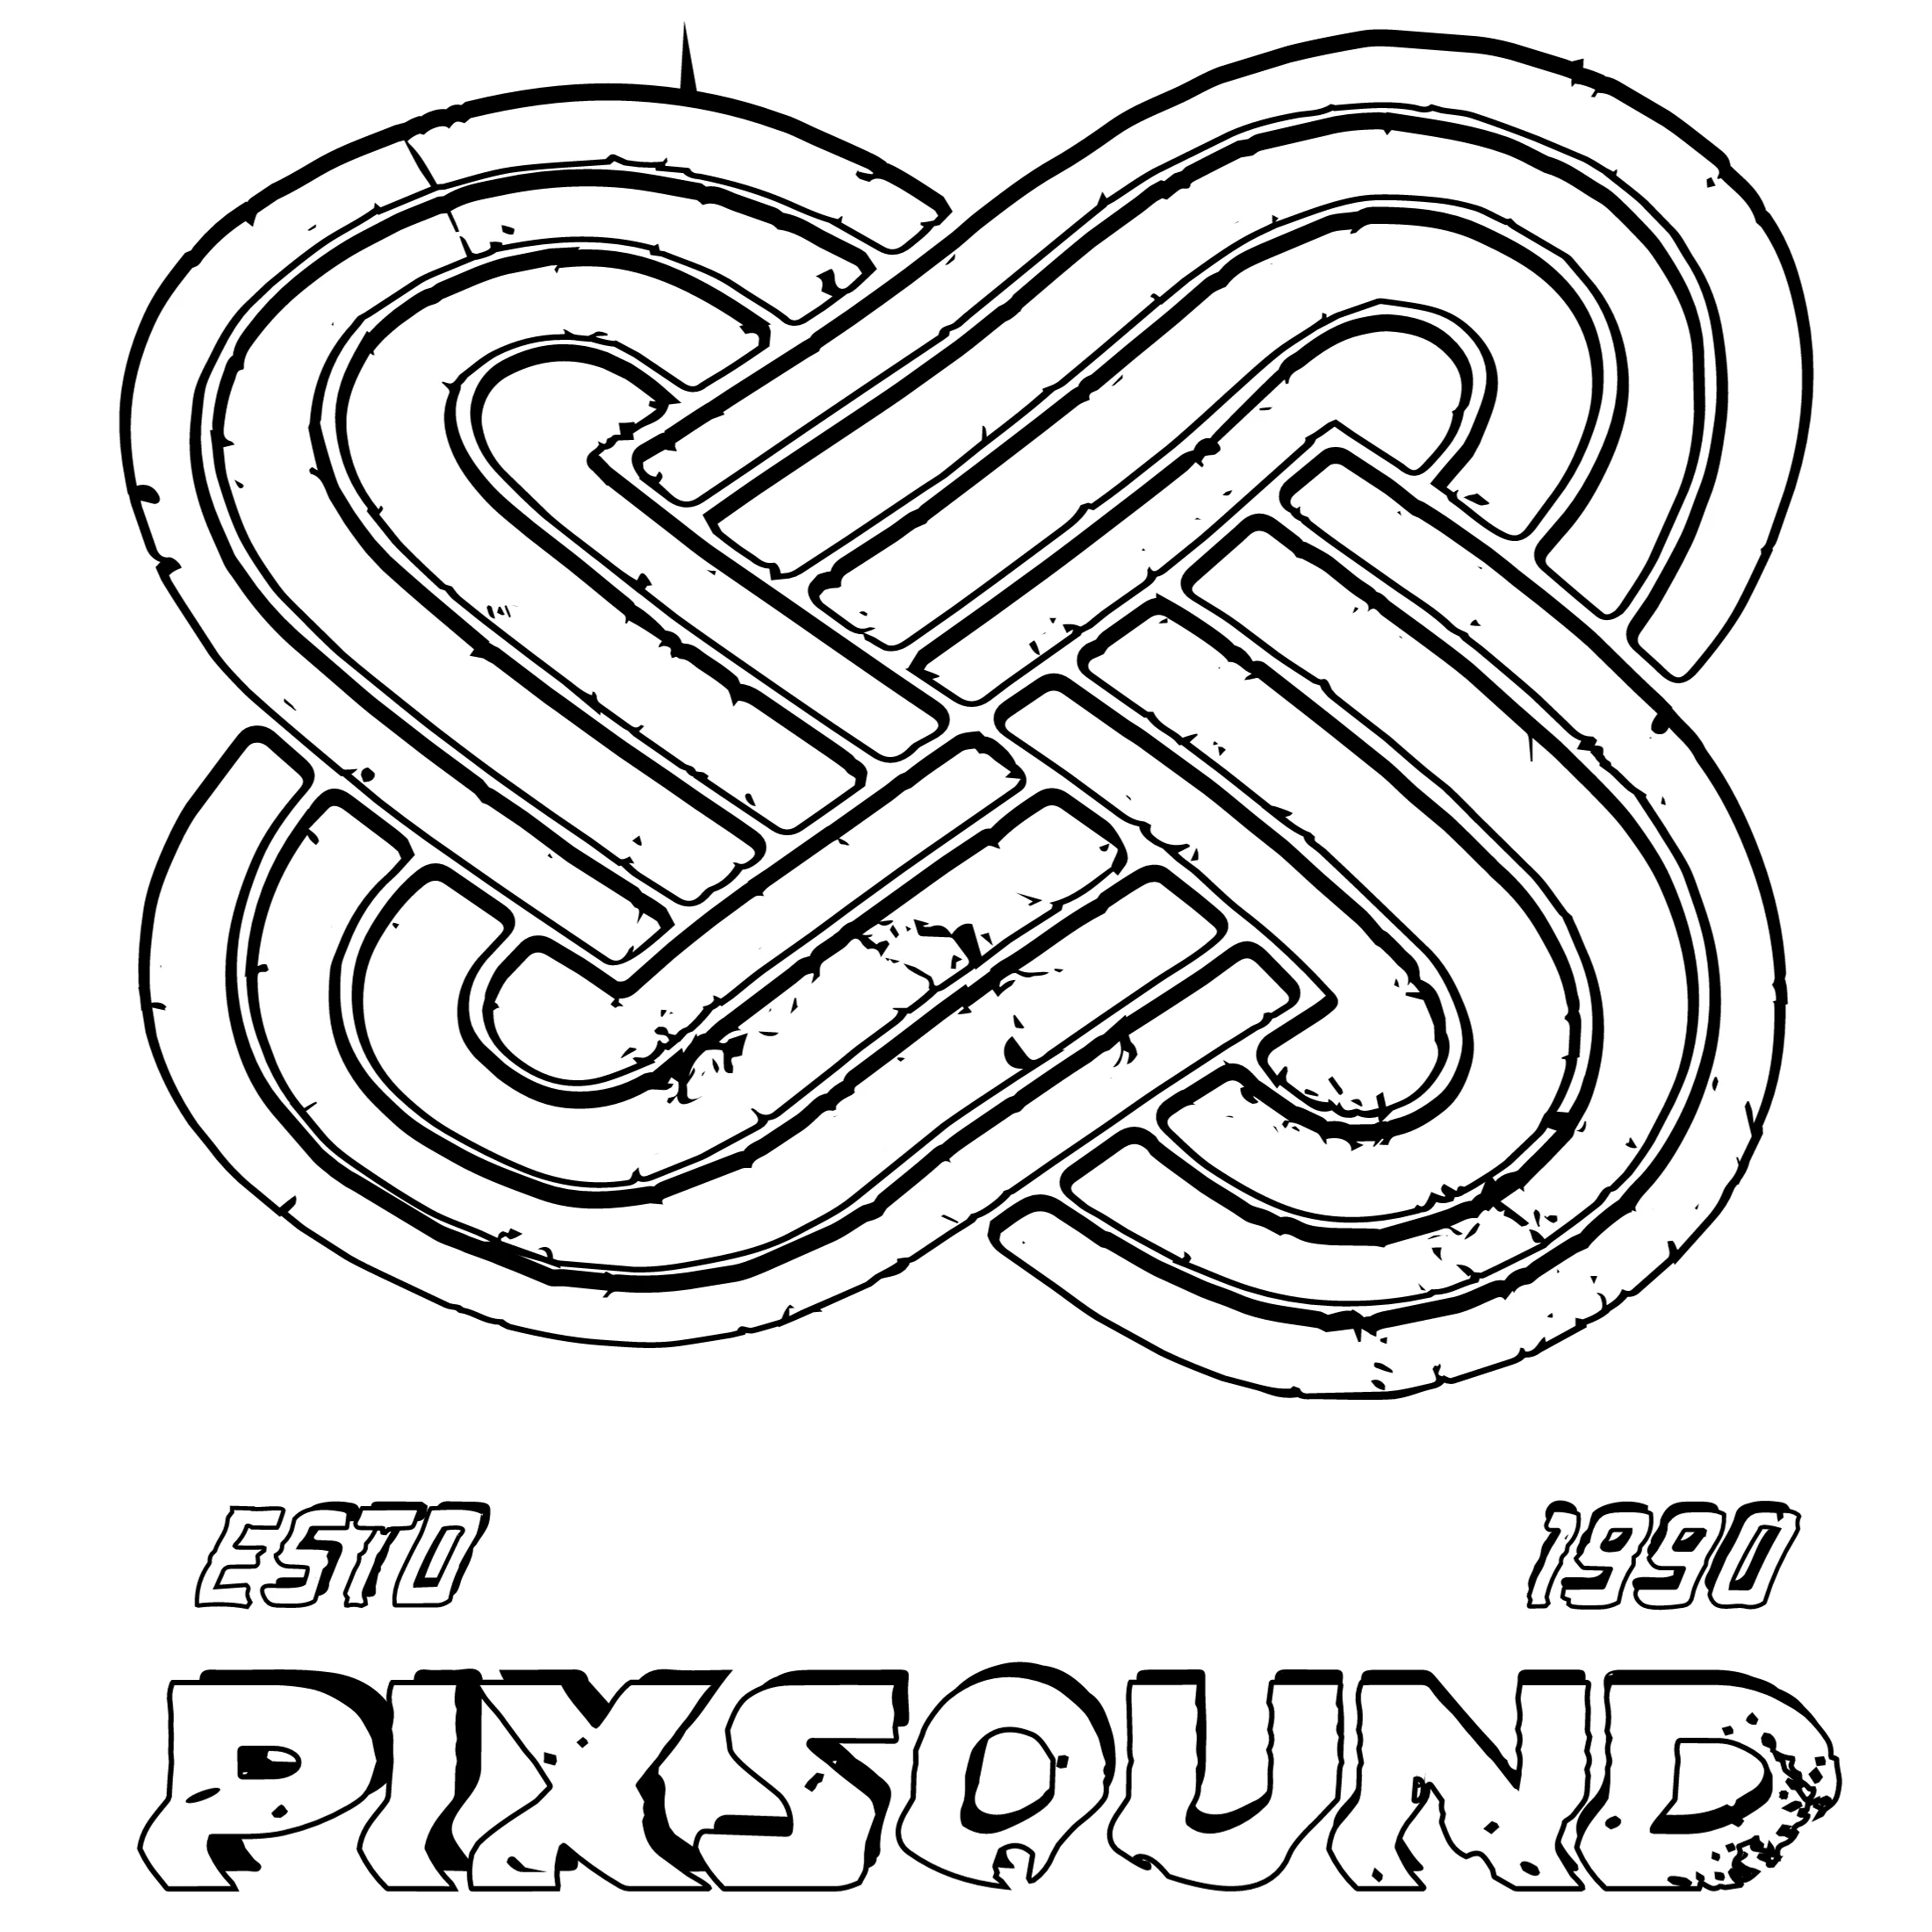 Pixsound